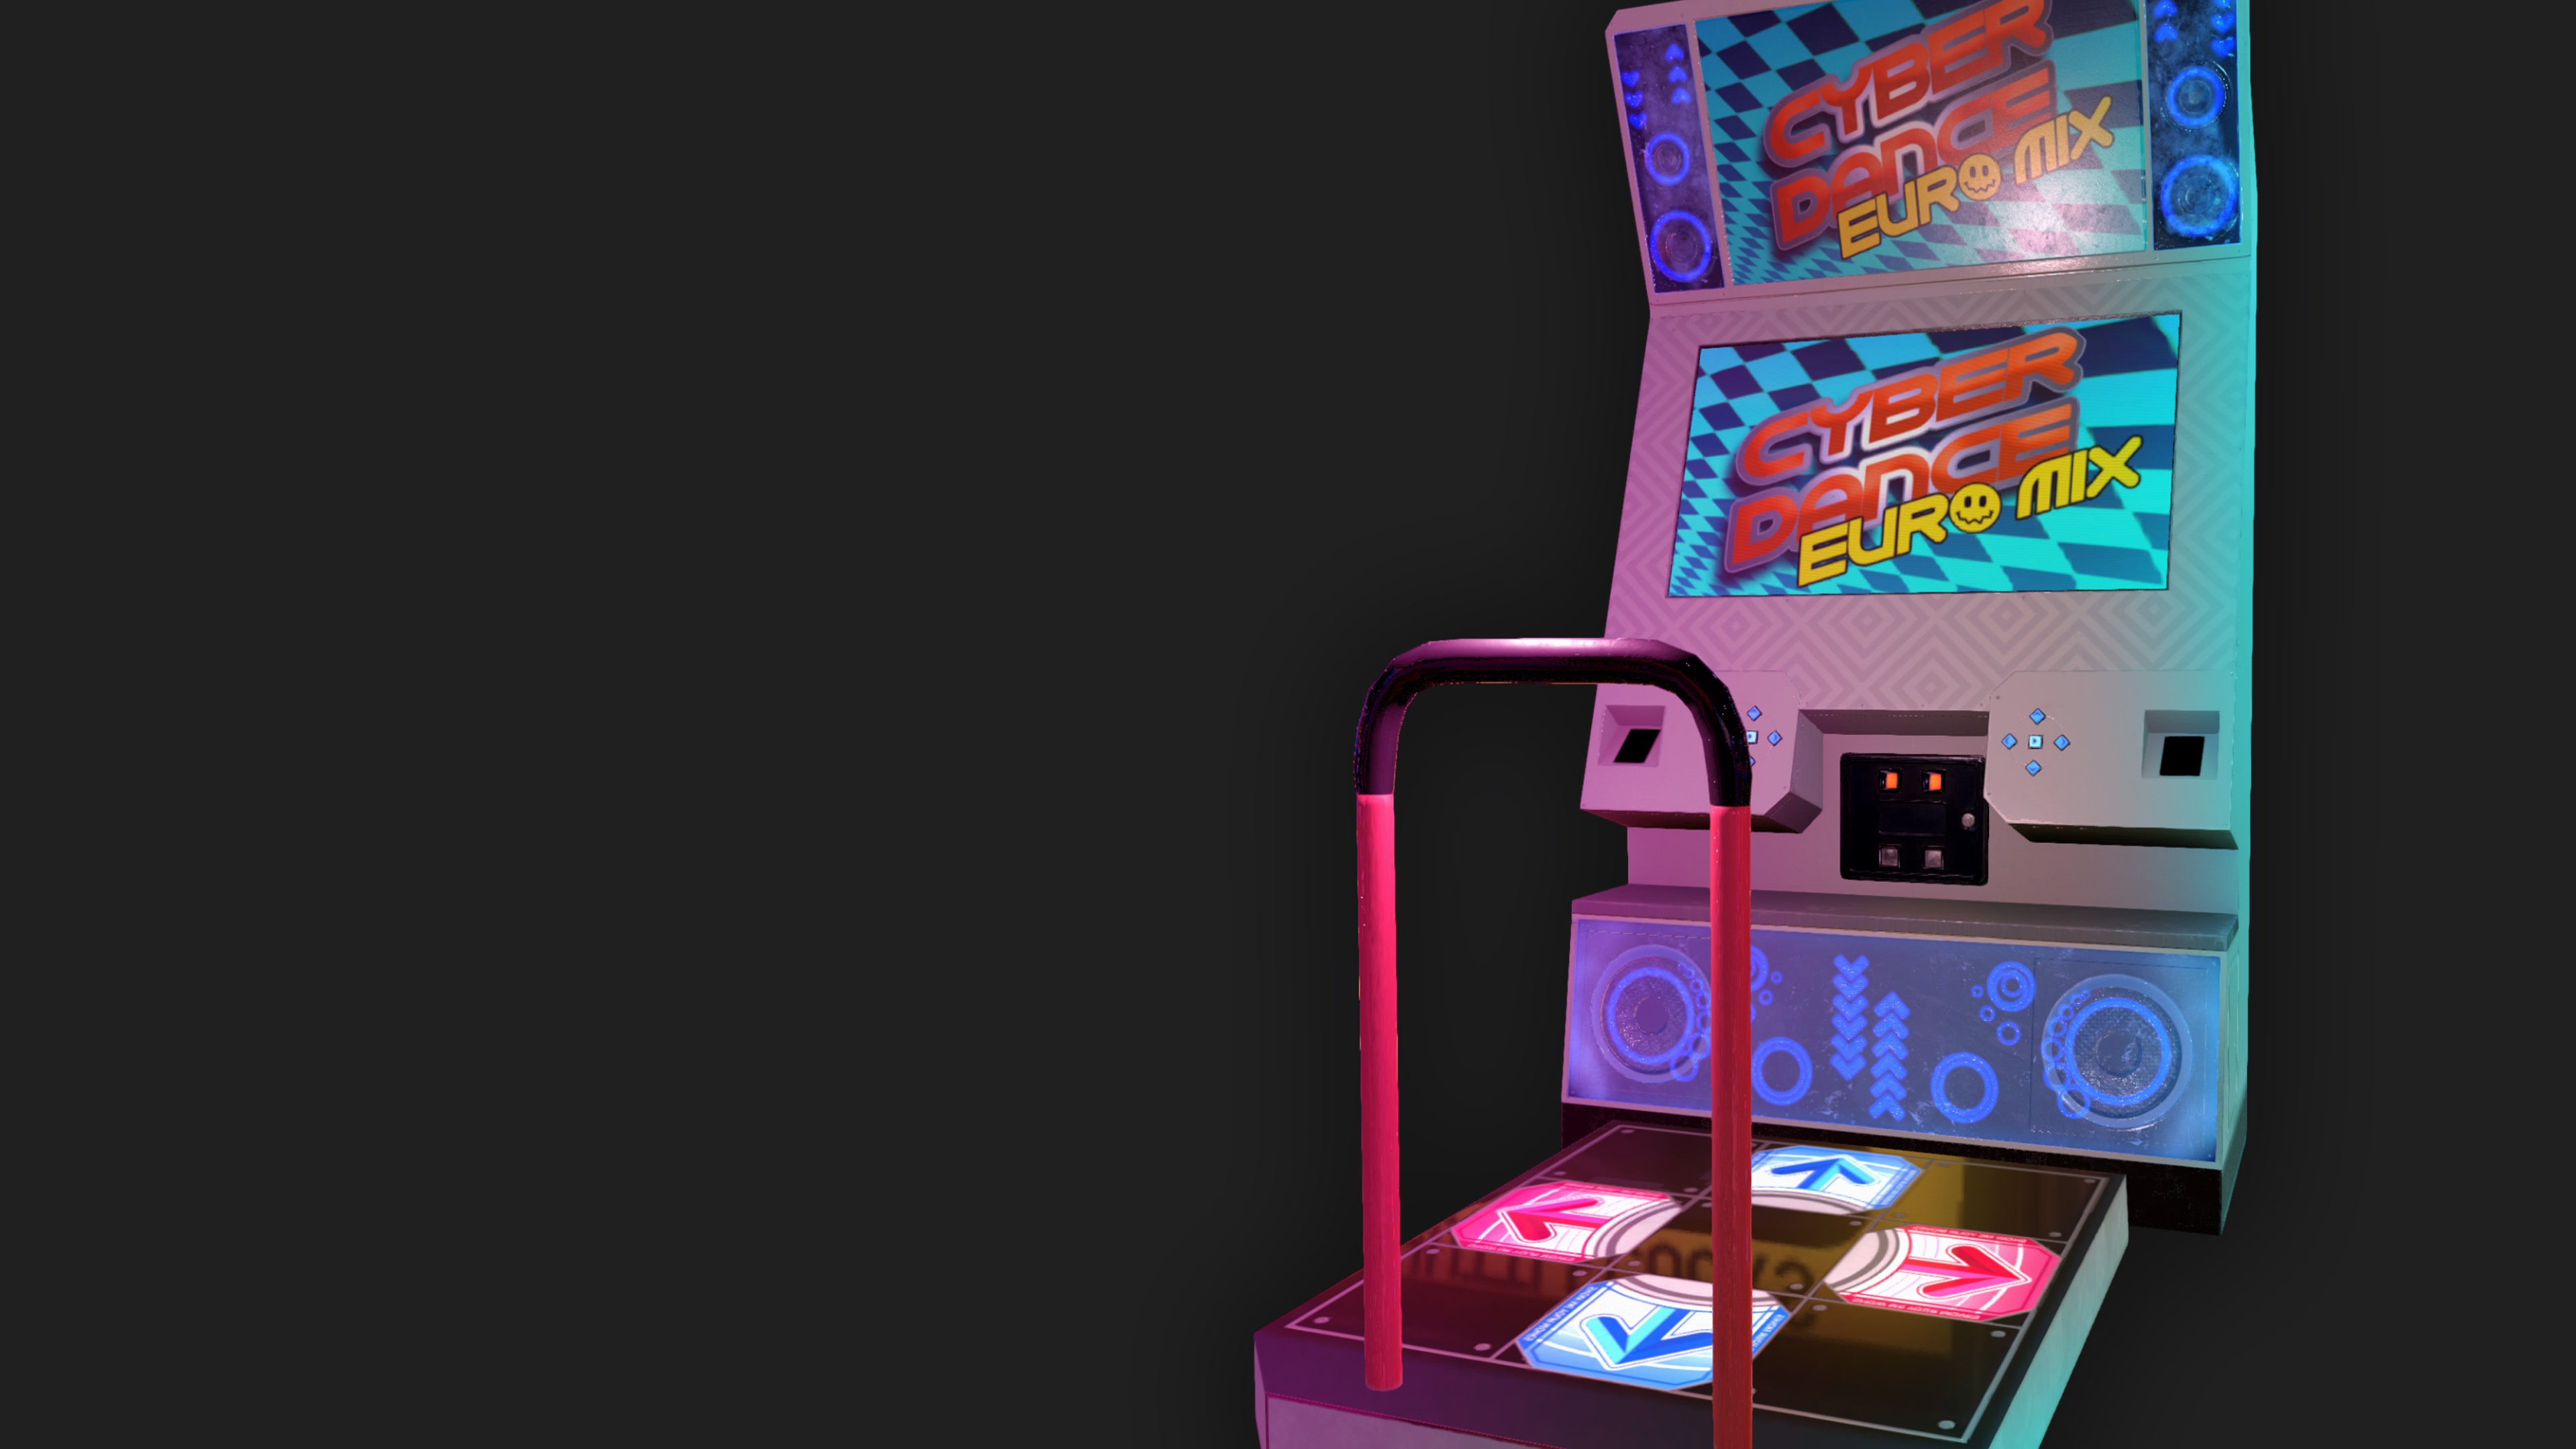 Arcade Paradise - Cyber Dance Euromix (中日英韓文版)